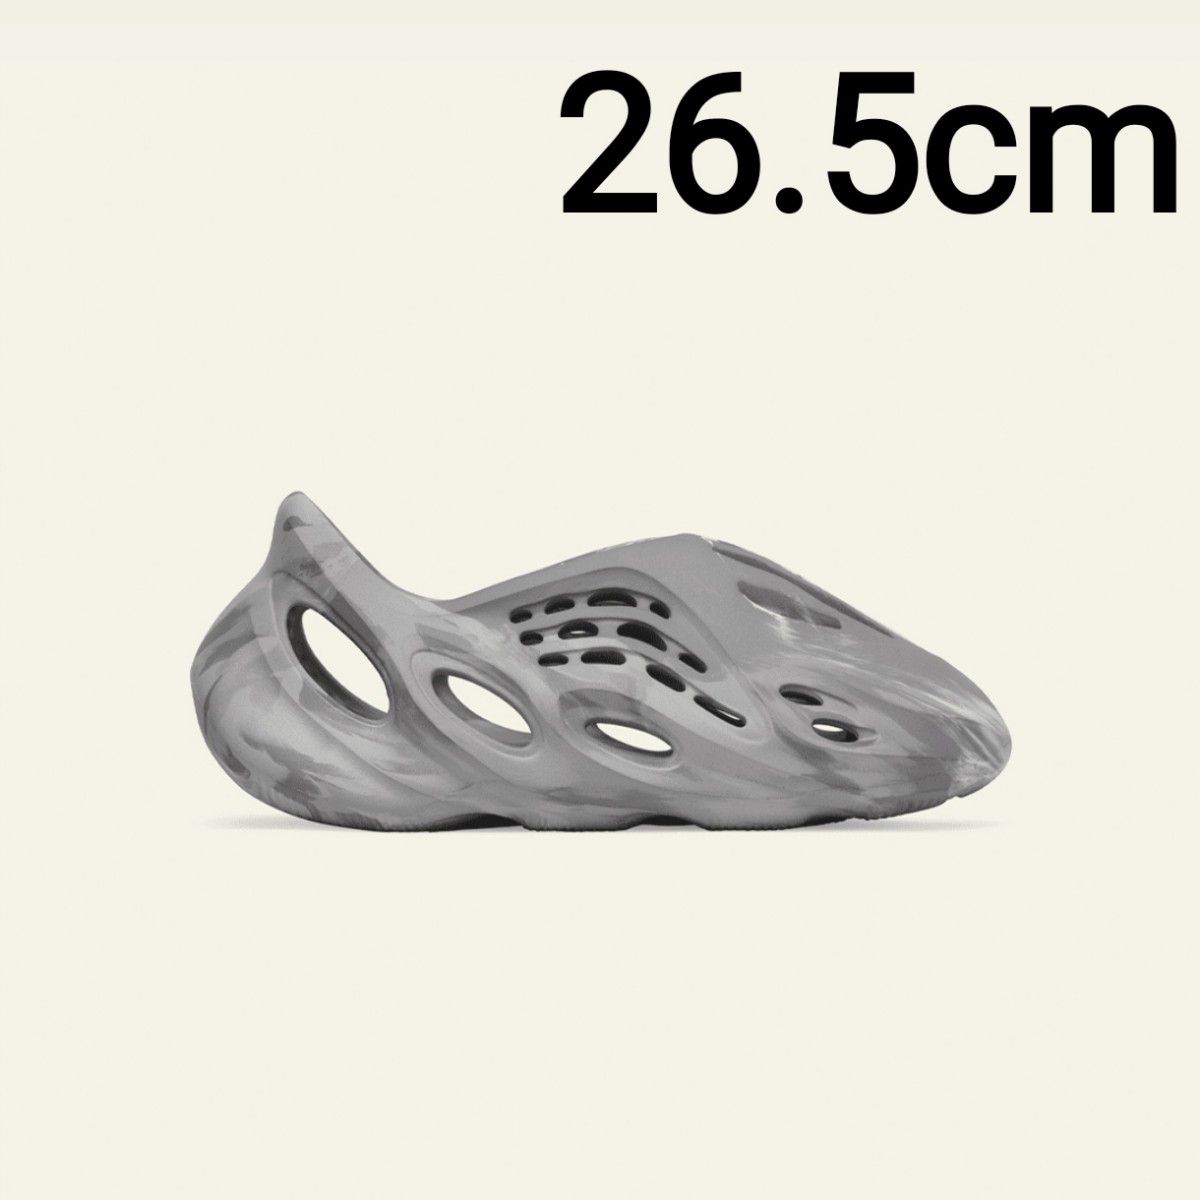 adidas YEEZY Foam Runner MX Granite 26.5cm